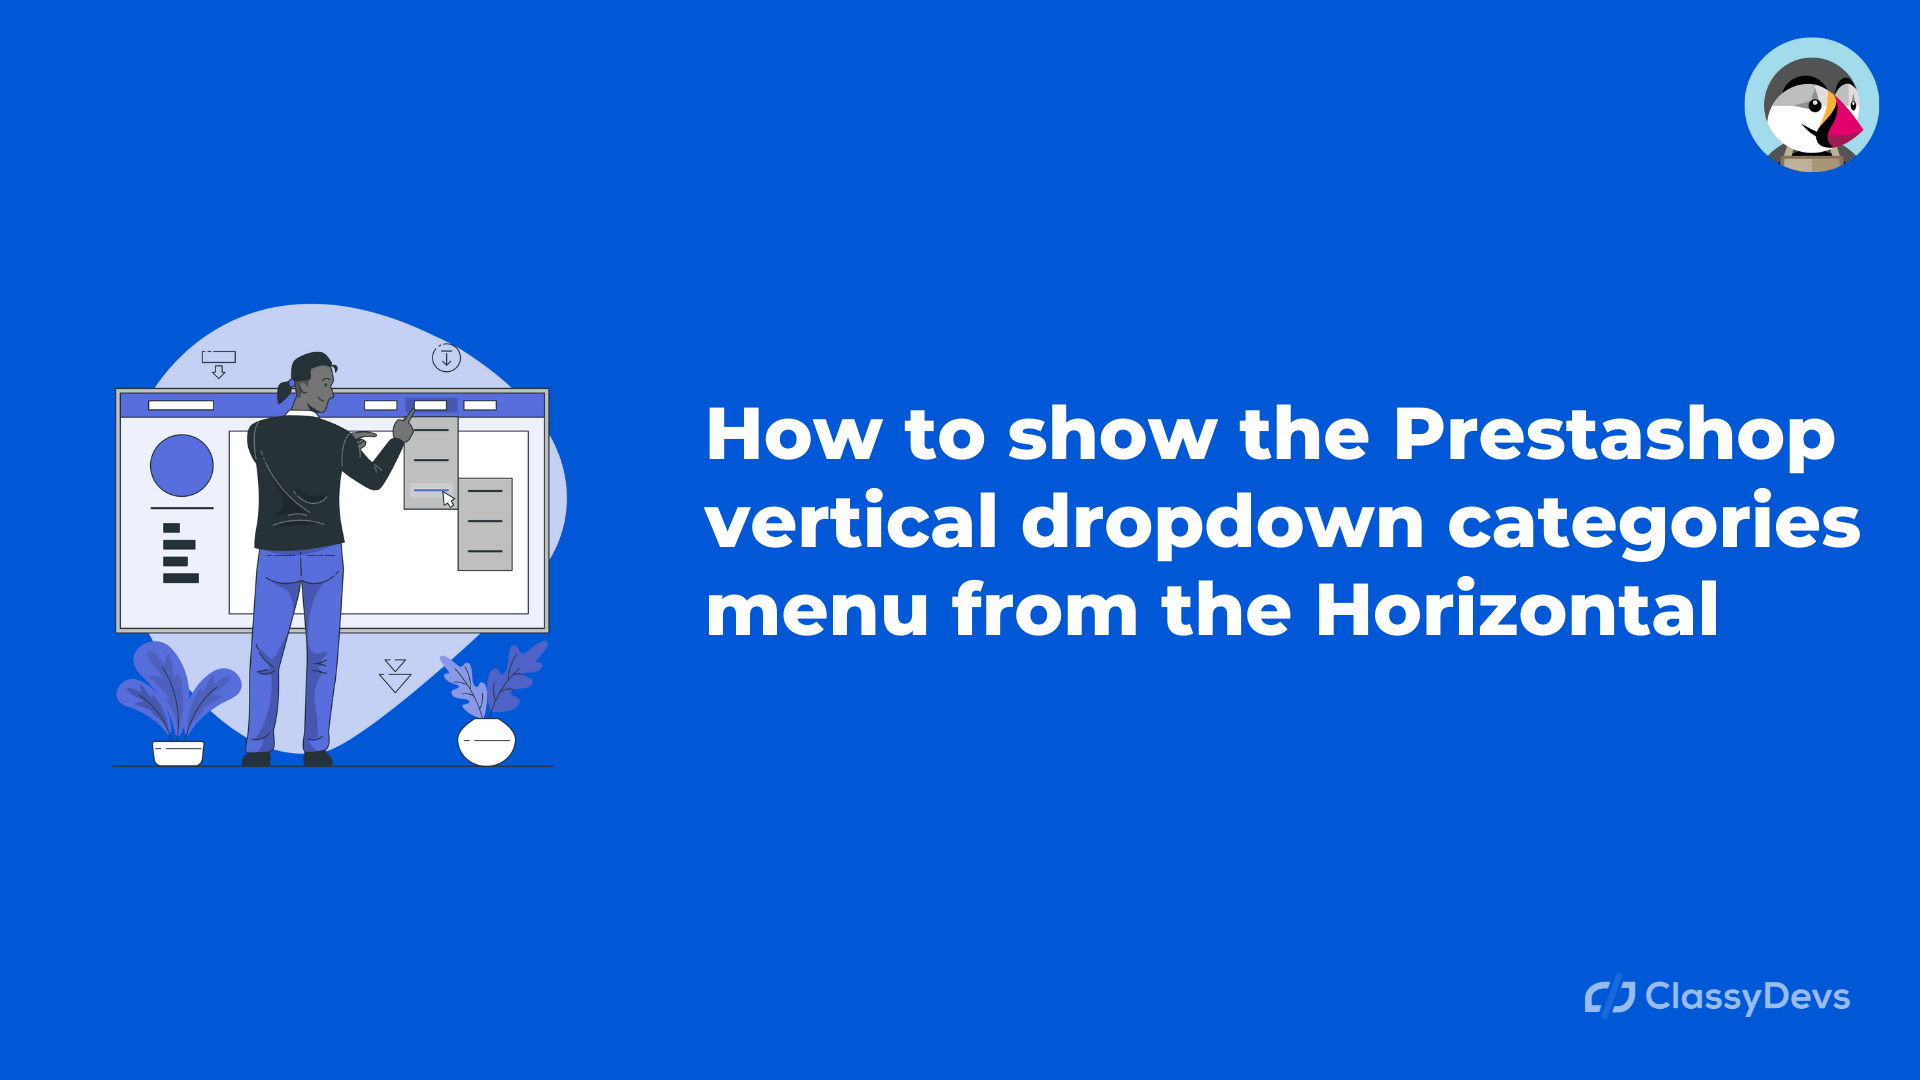 Prestashop vertical dropdown categories menu